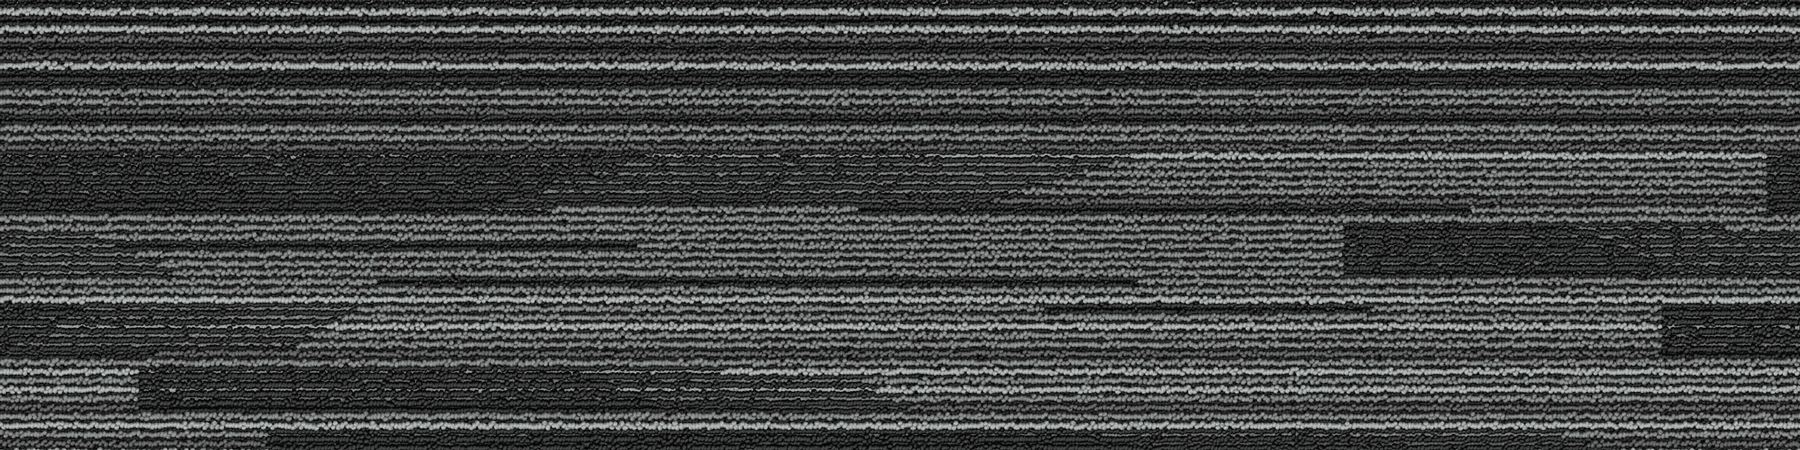 Standard Carpets (BUBAPLK775) product